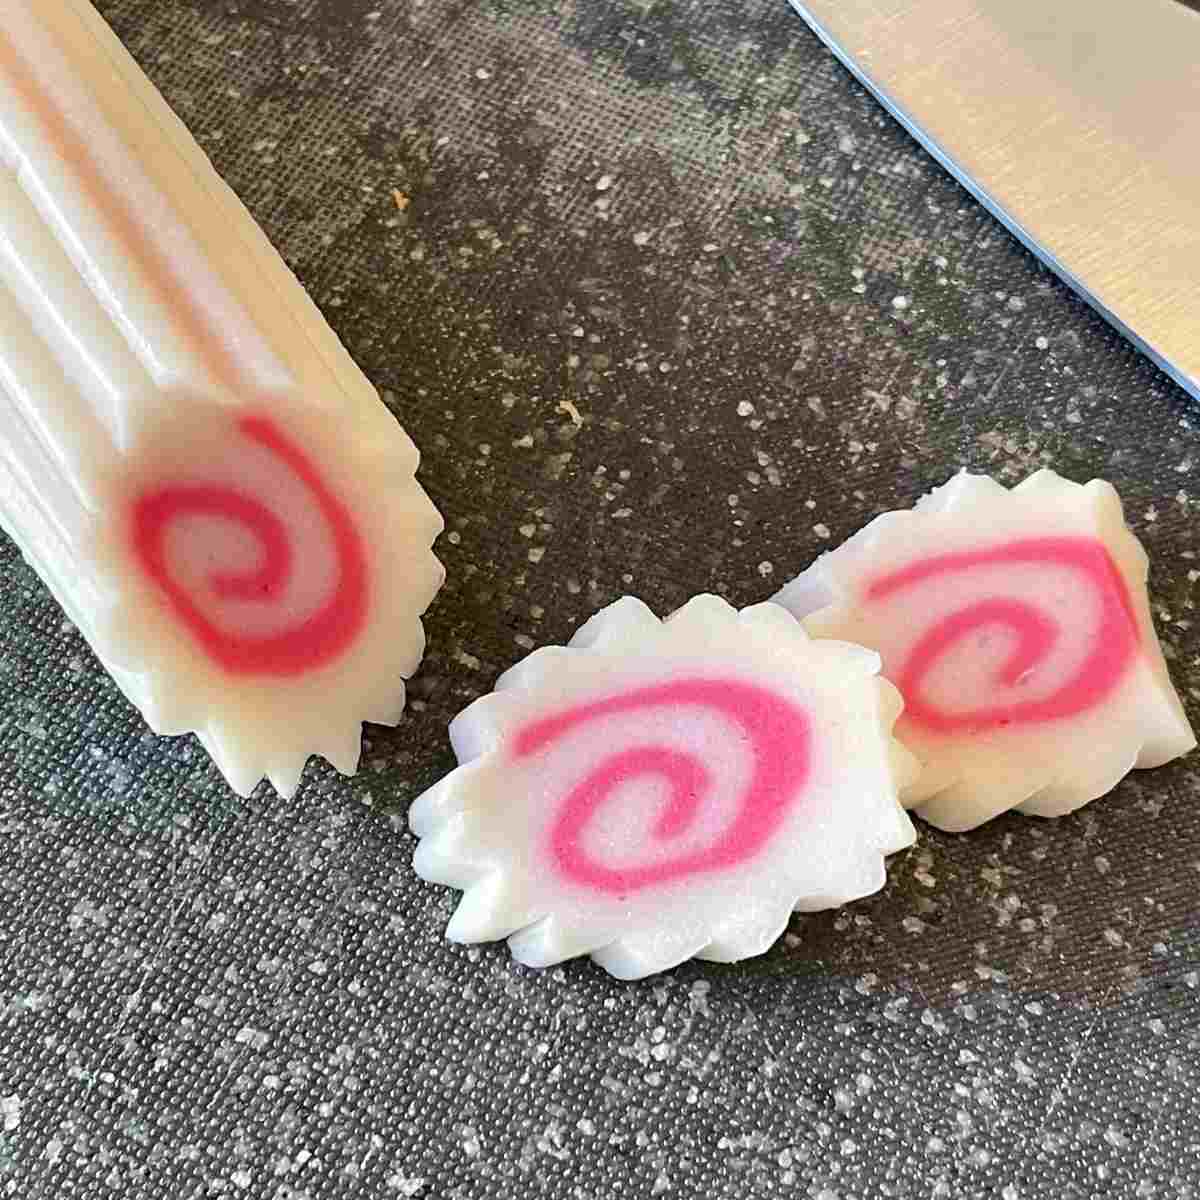 how to slice narutomaki